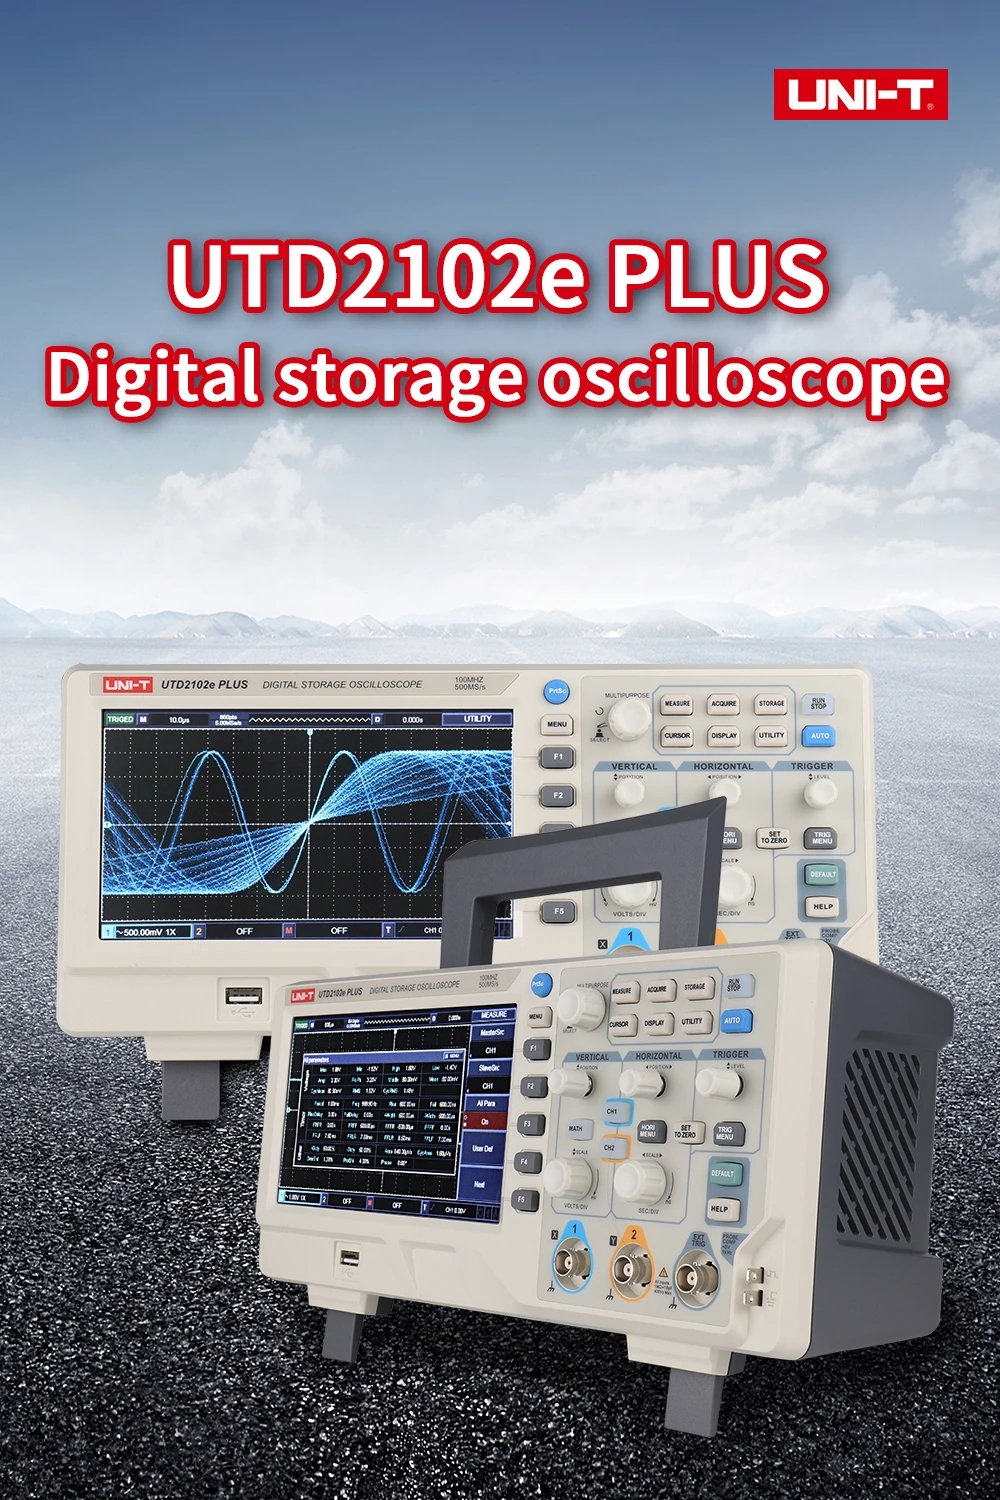 UNI-T-UTD2102e-PLUS-Digital-Oscilloscope-with-7-inch-LCD-Display-Scopemeter-with-100MHz-Bandwidth-2--1954251-1